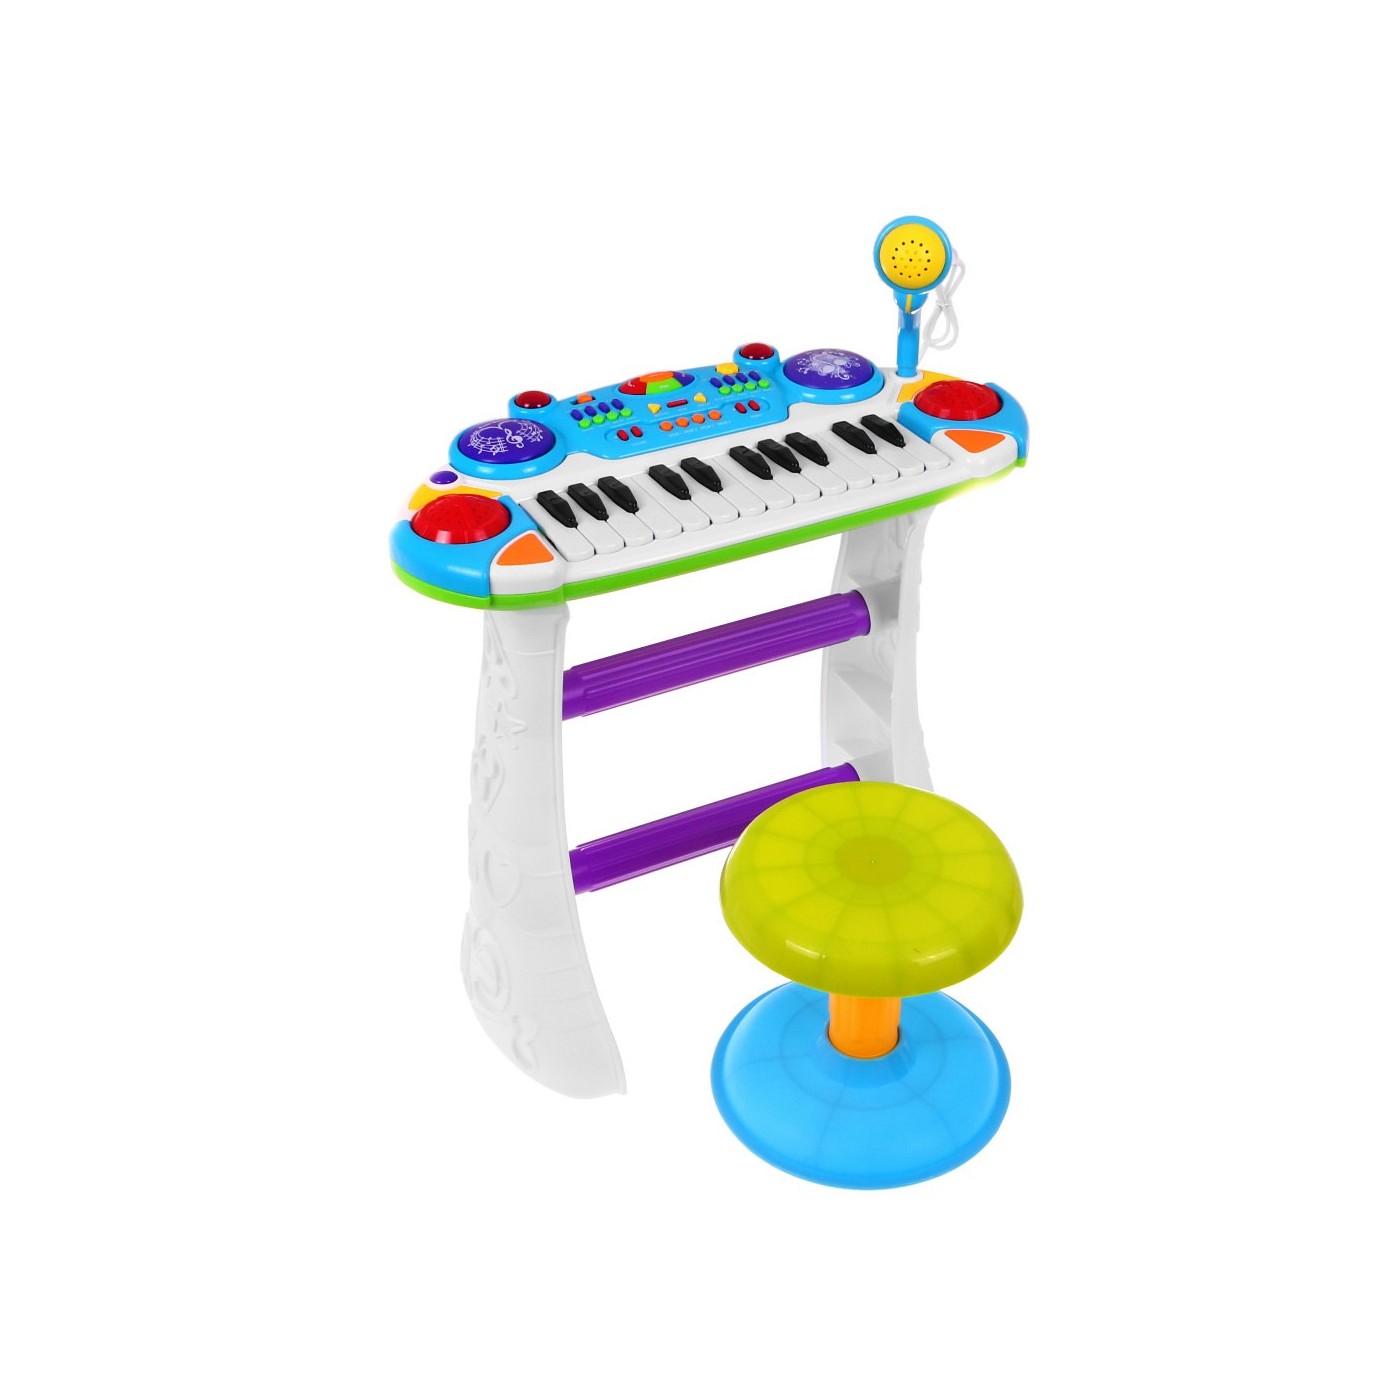 Keyboard 2 octave Blue